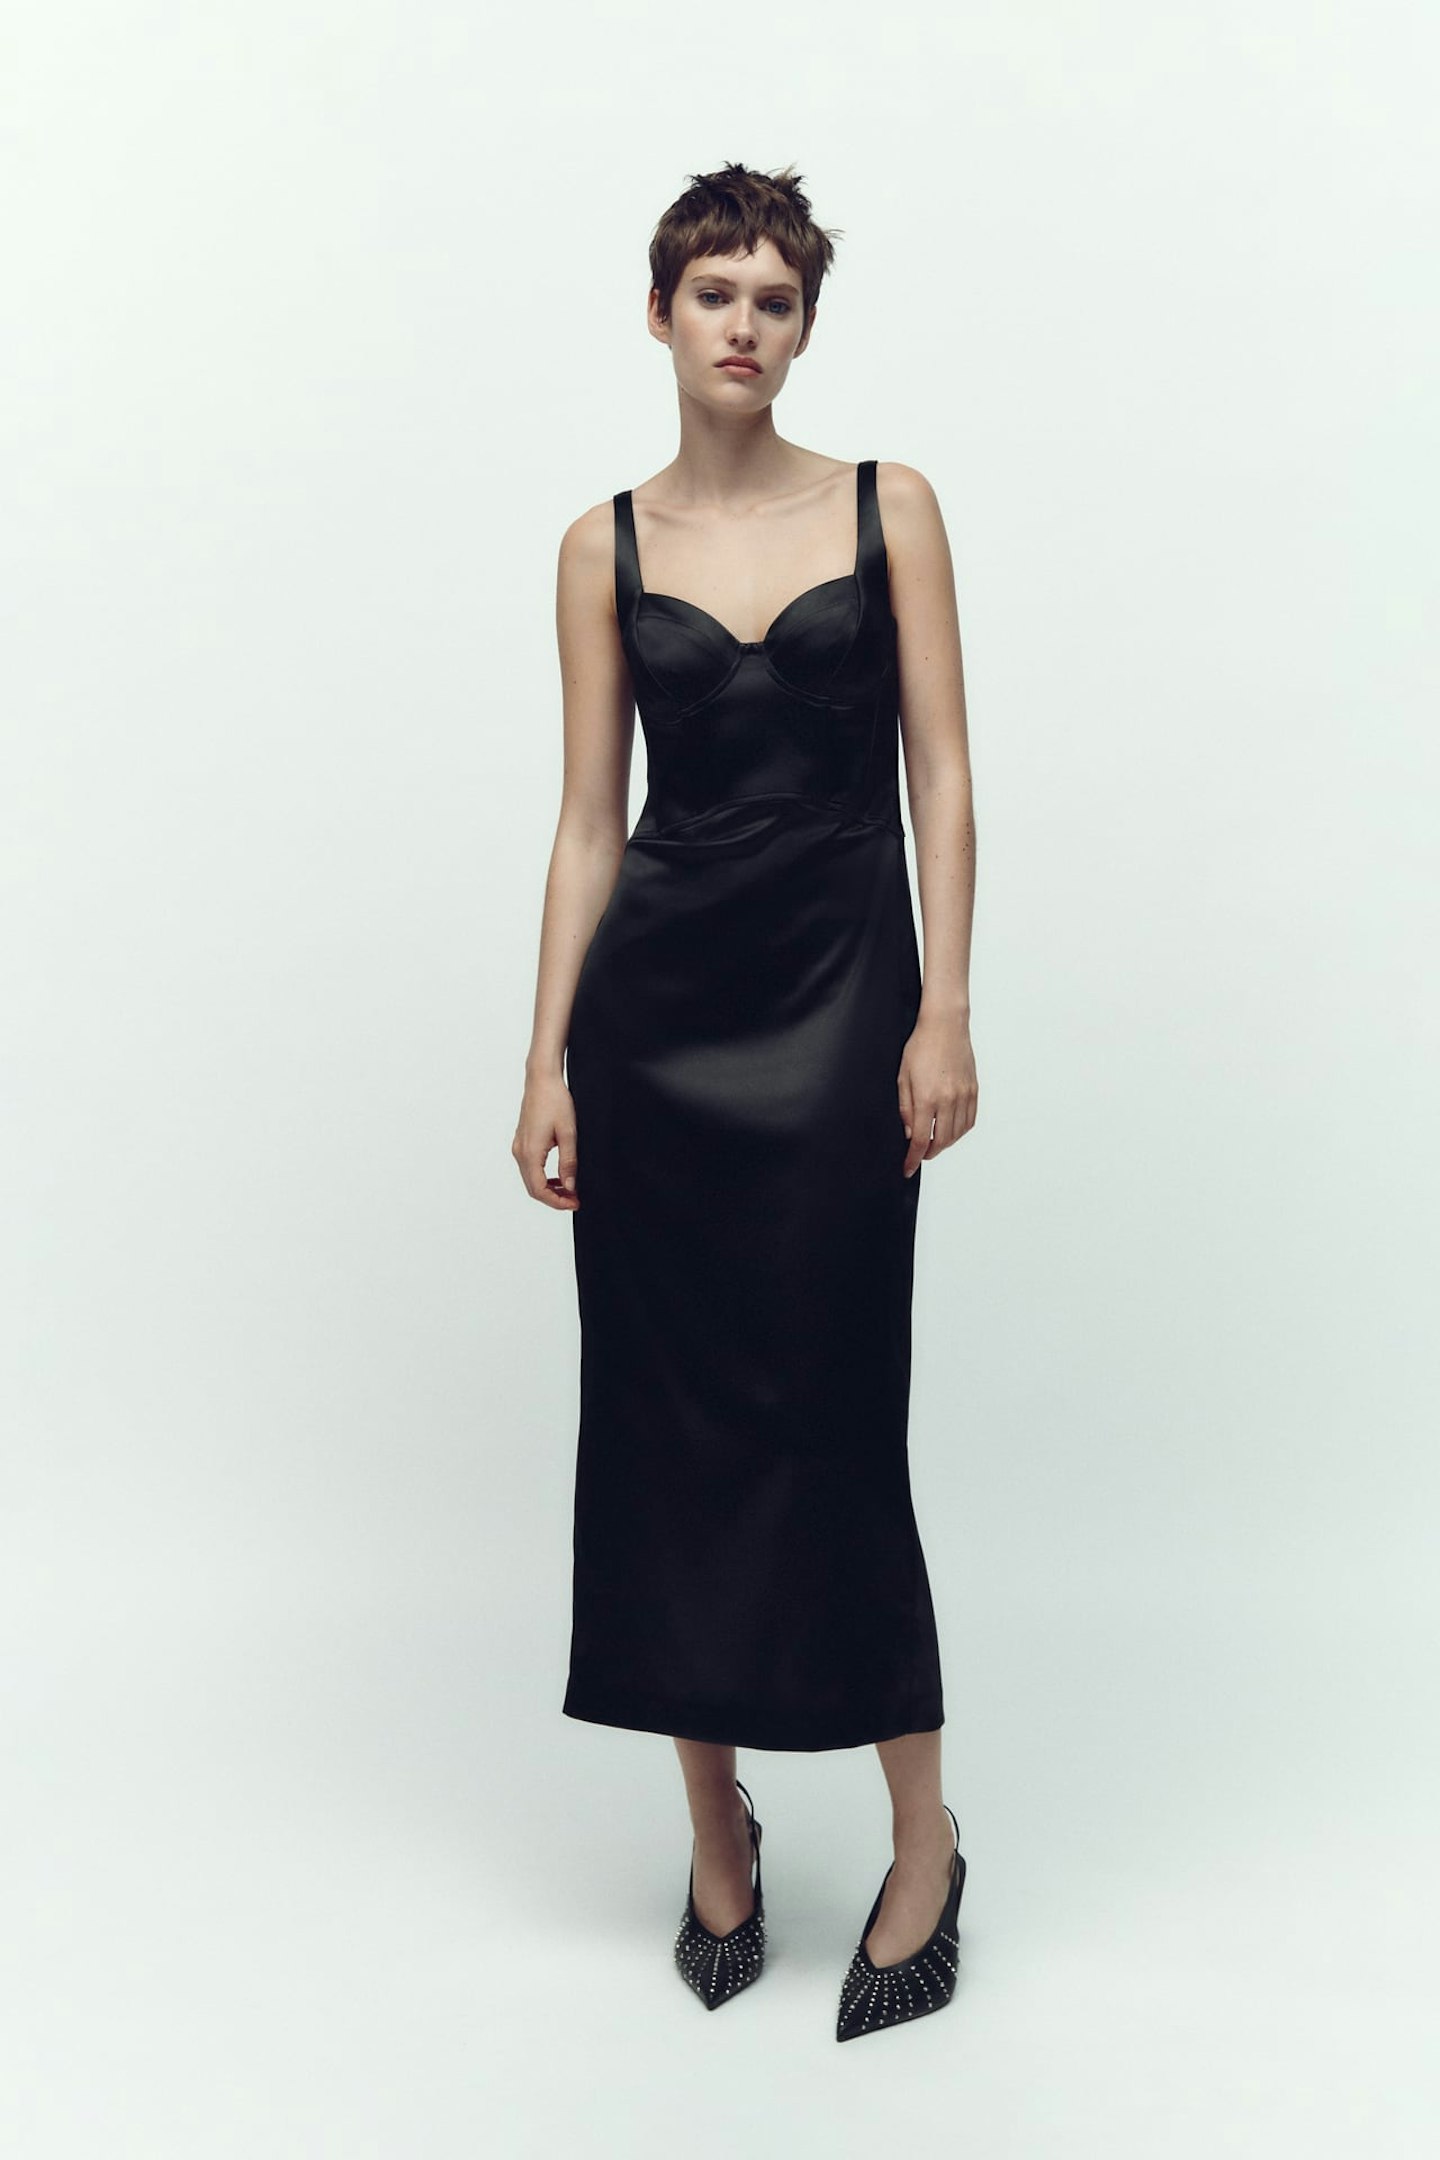 Zara, Corsetry-Inspired Dress